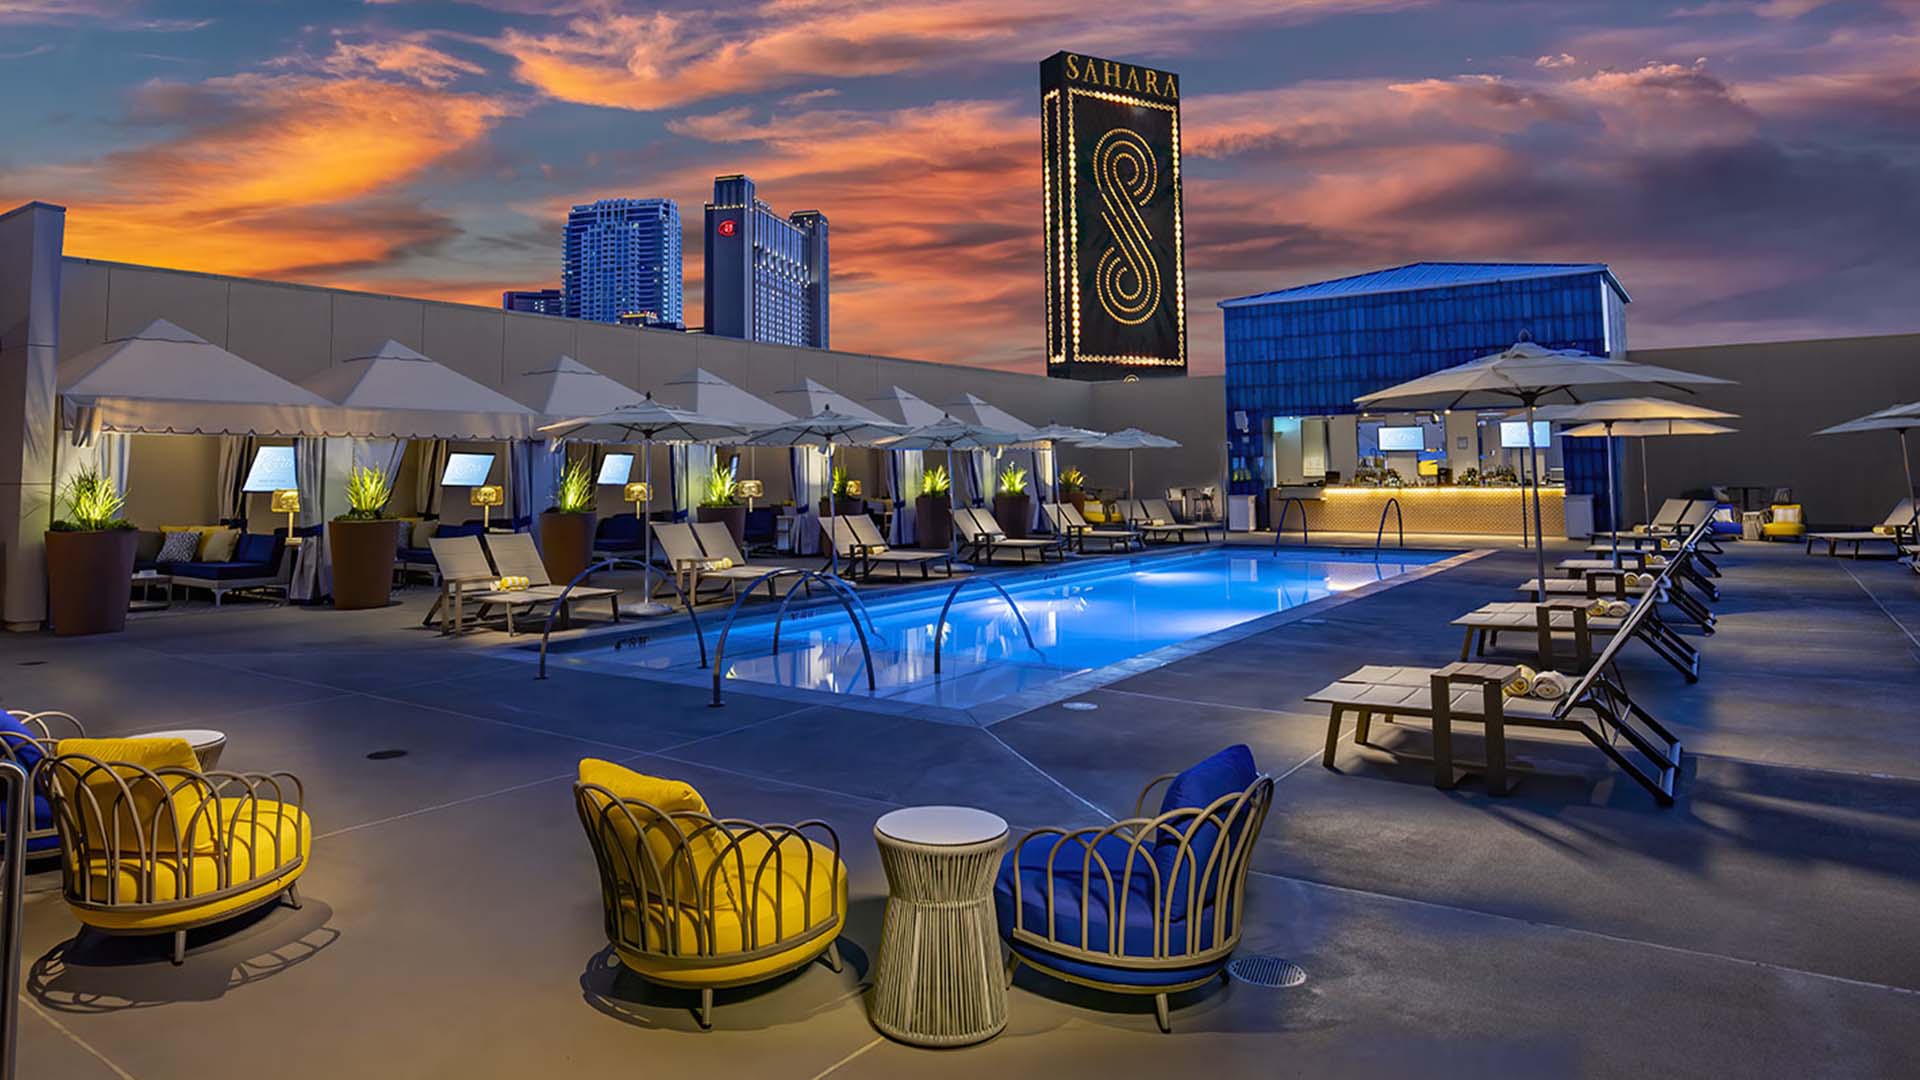 SAHARA Las Vegas Rooftop Pool